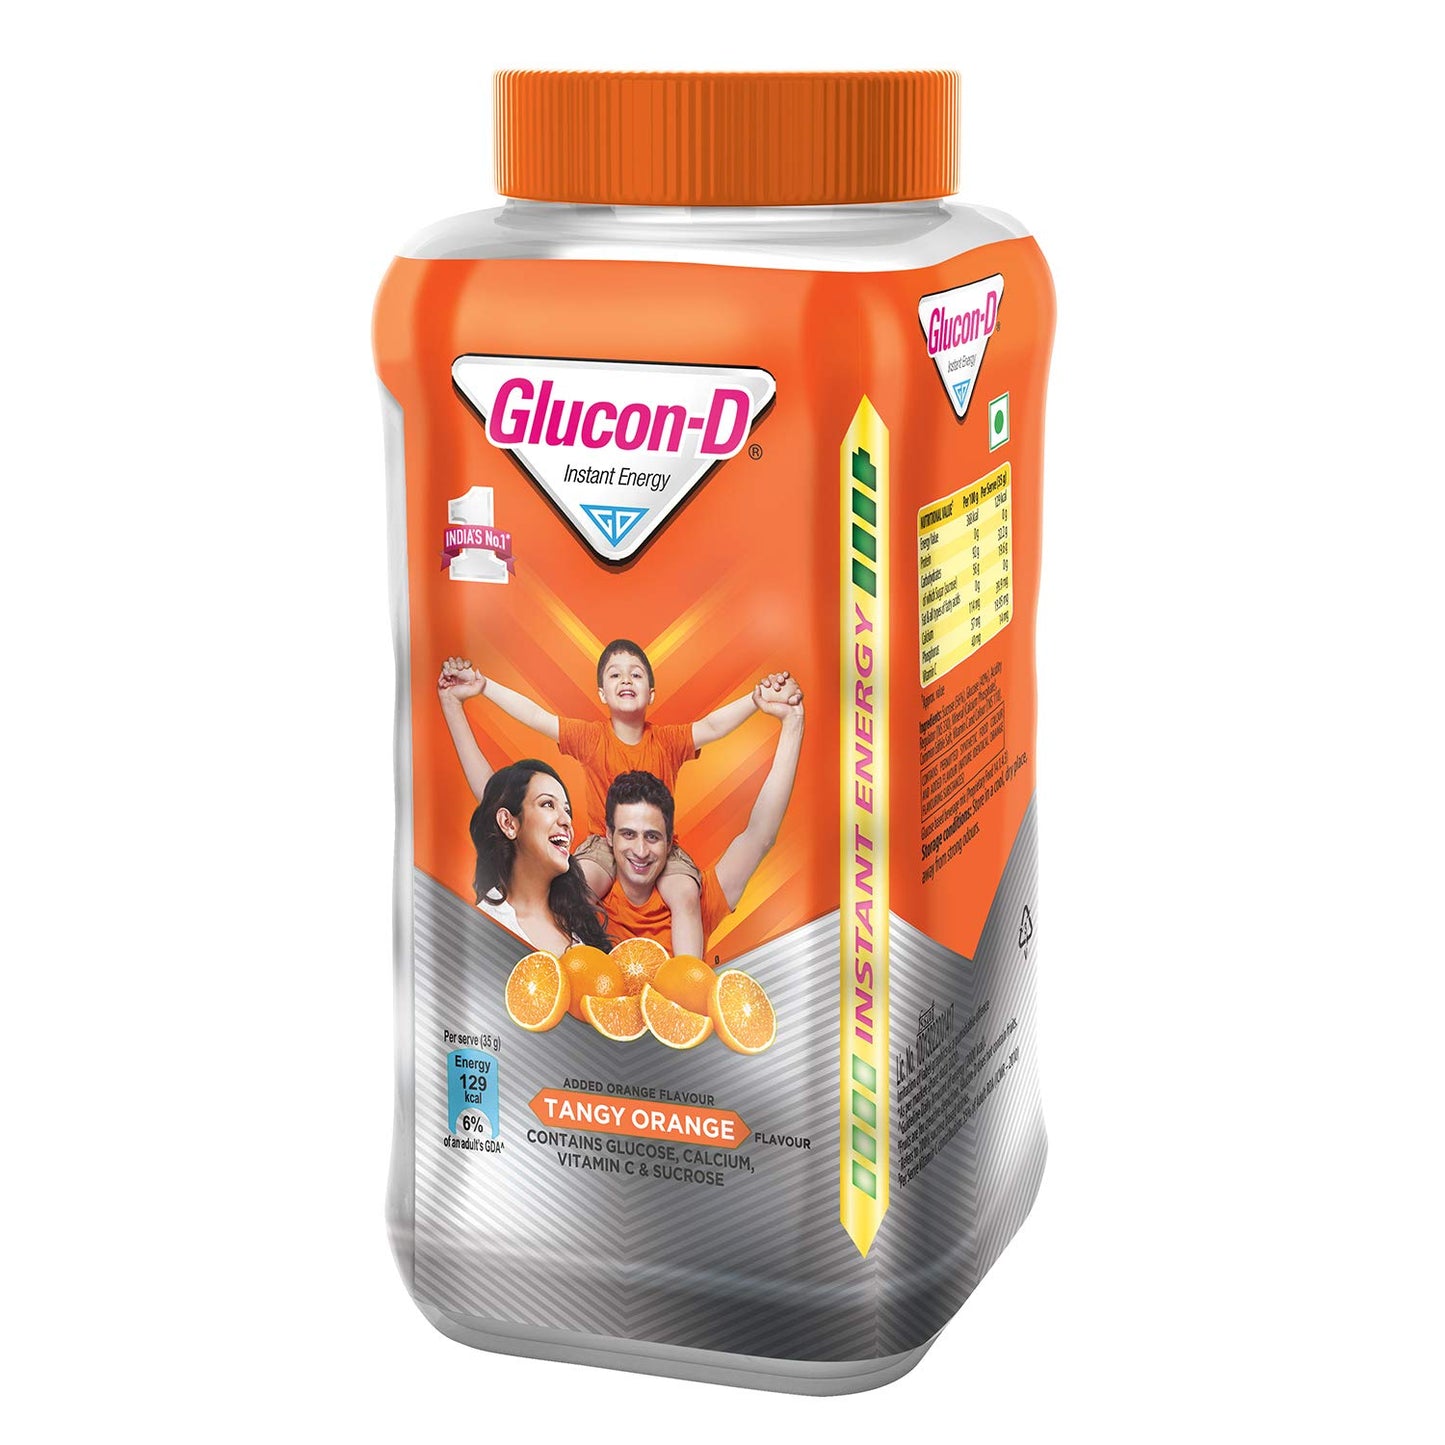 Glucon-D Instant Energy Health Drink Tangy Orange - 1kg Jar, Glucon-D 